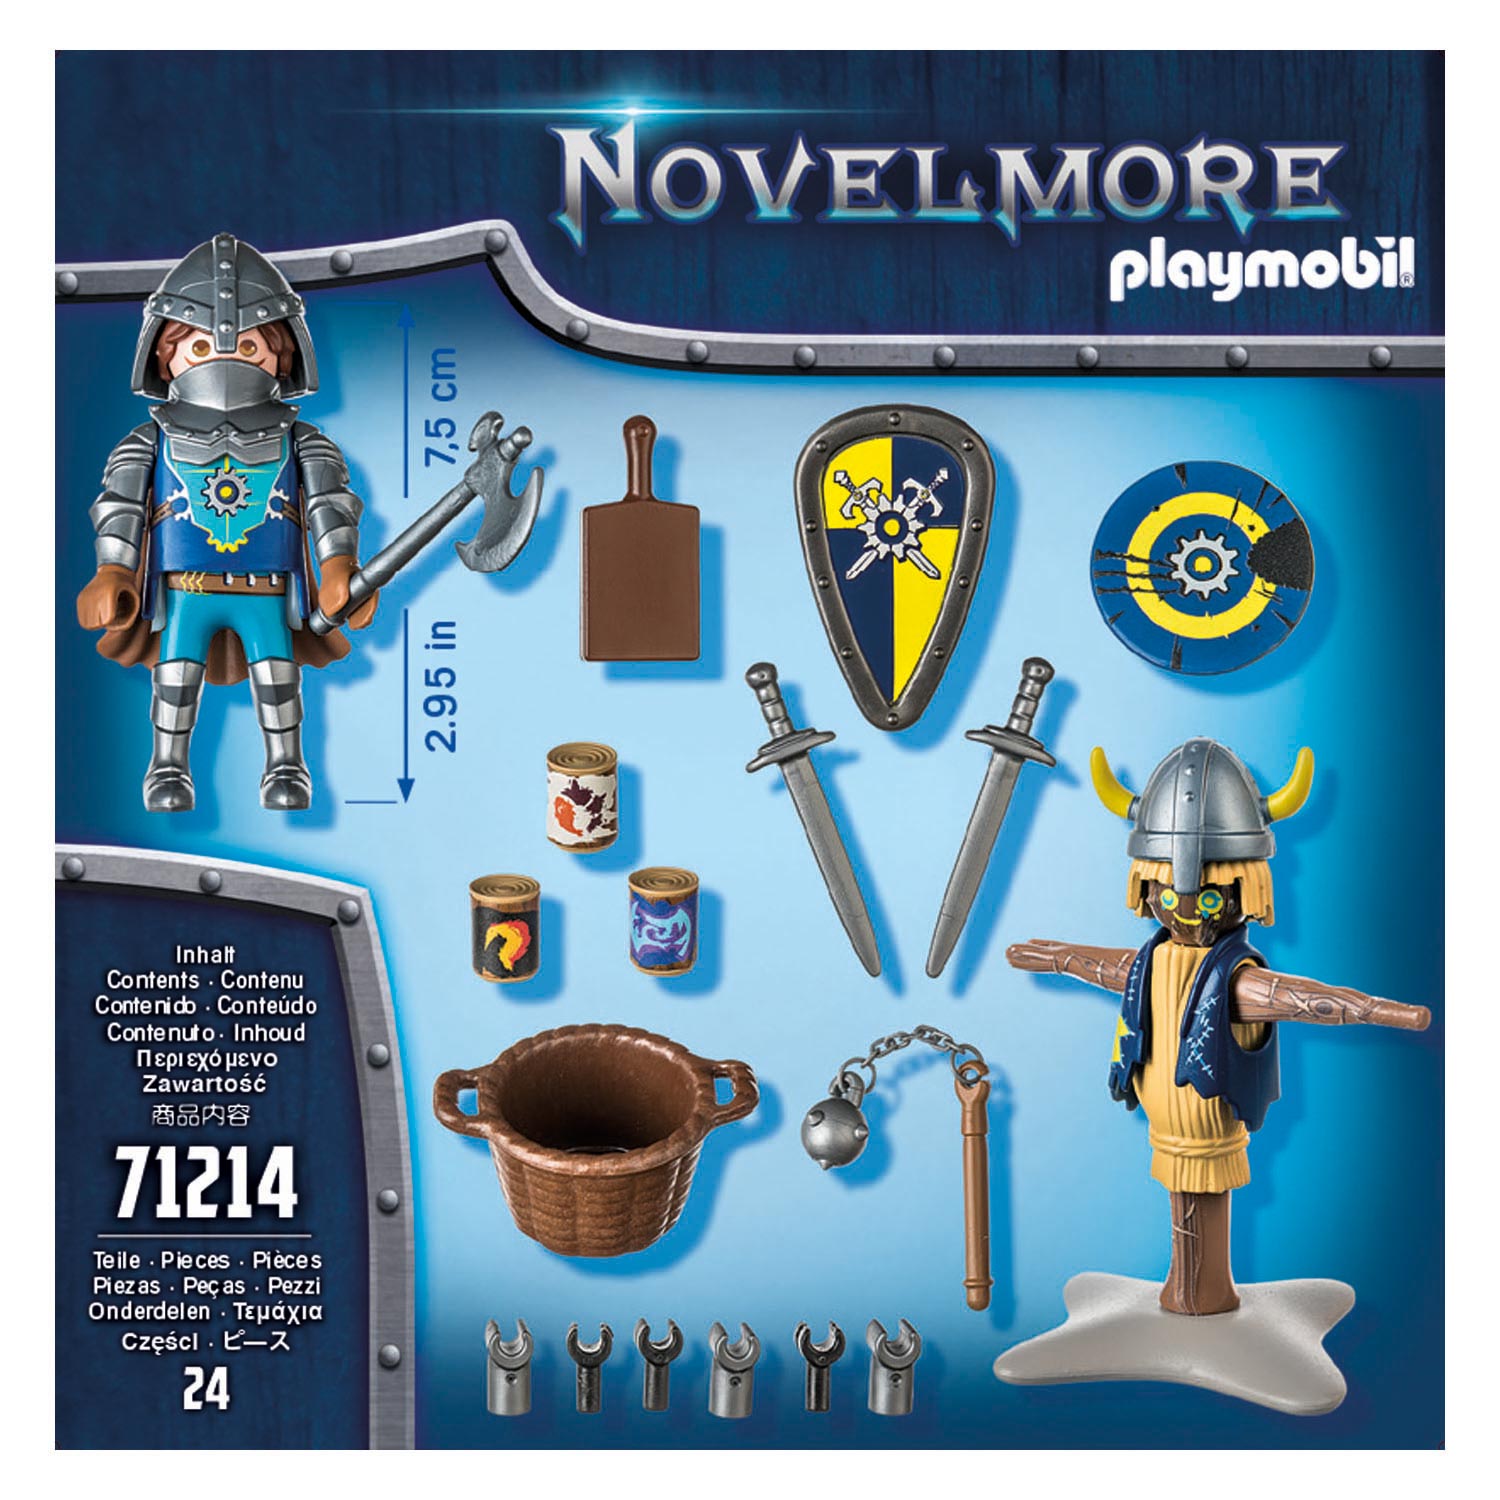 Playmobil Novelmore – Kampftraining – 71214